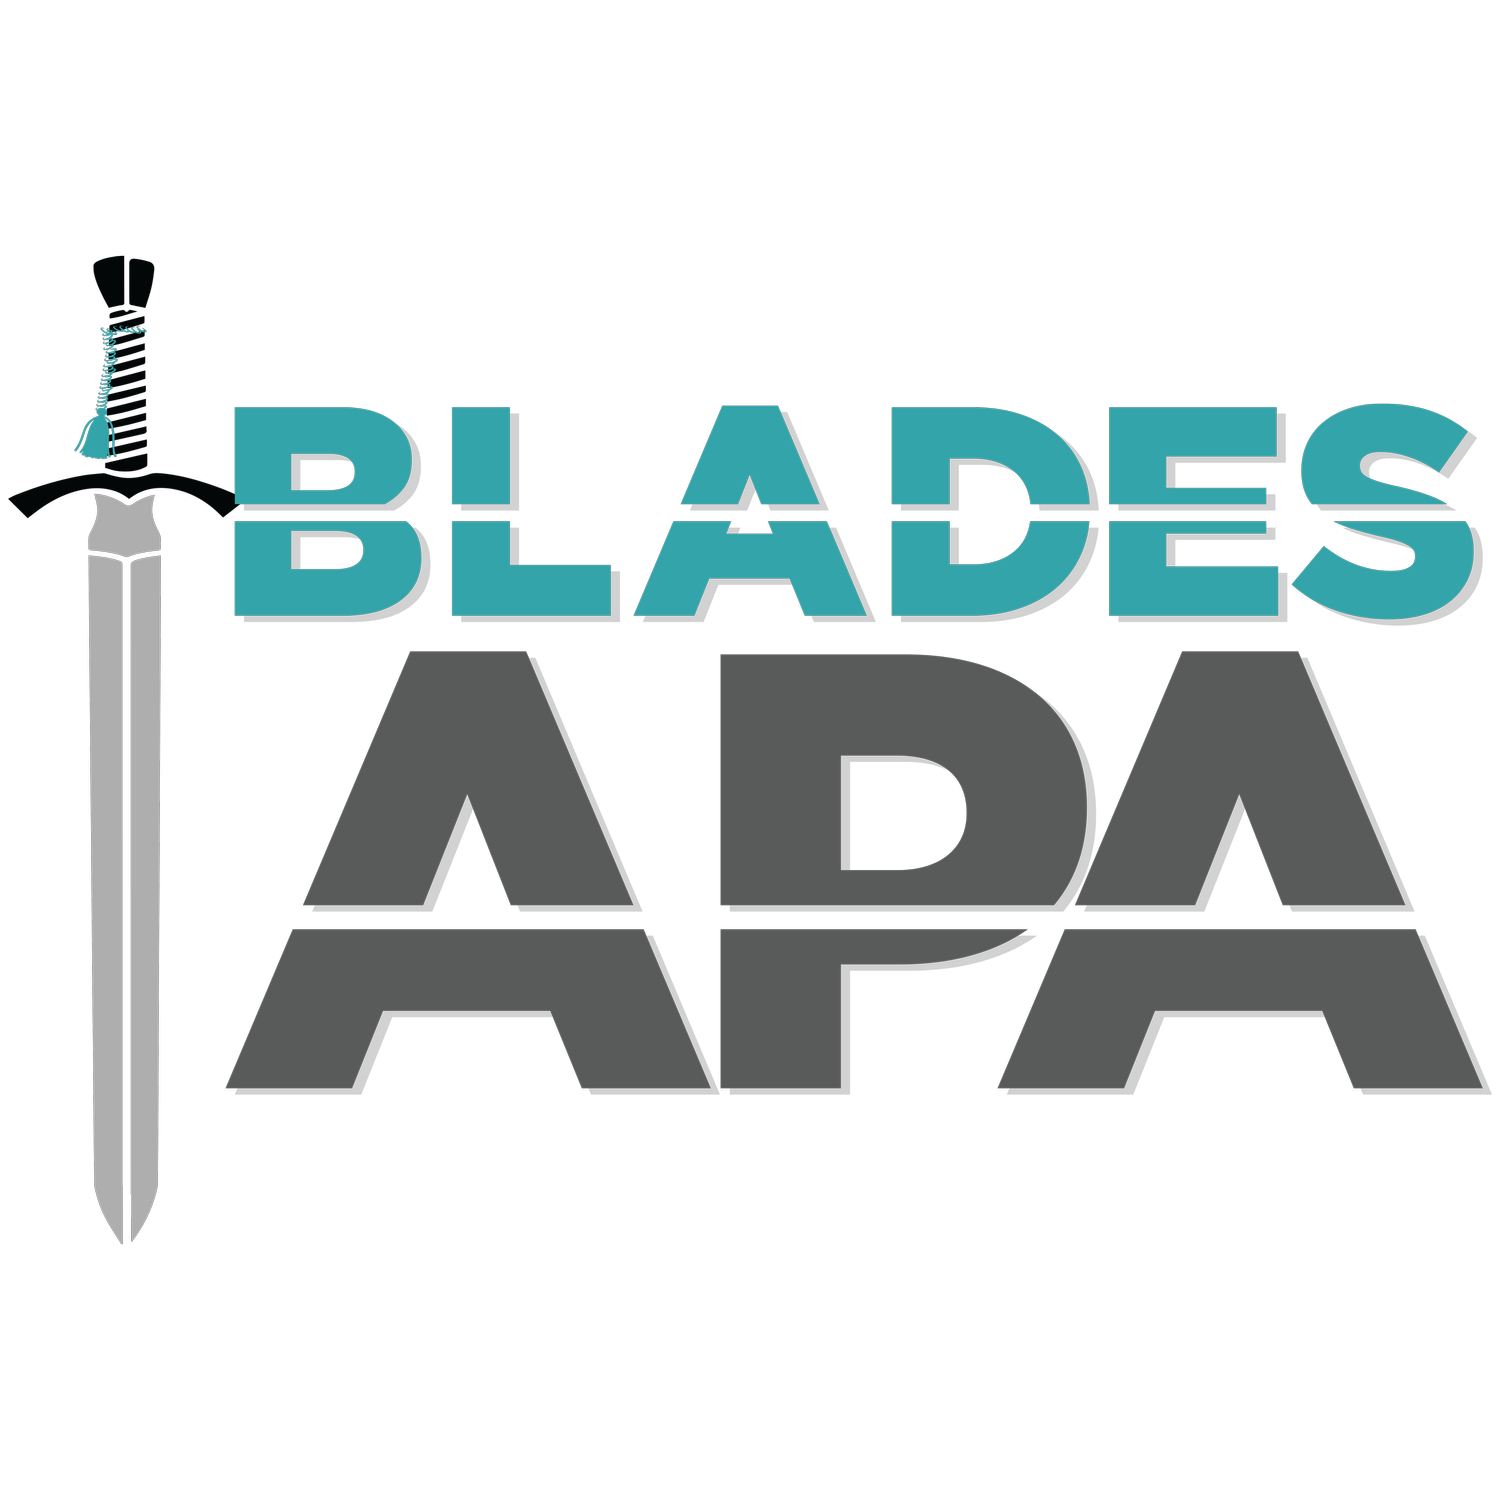 BladesAPA